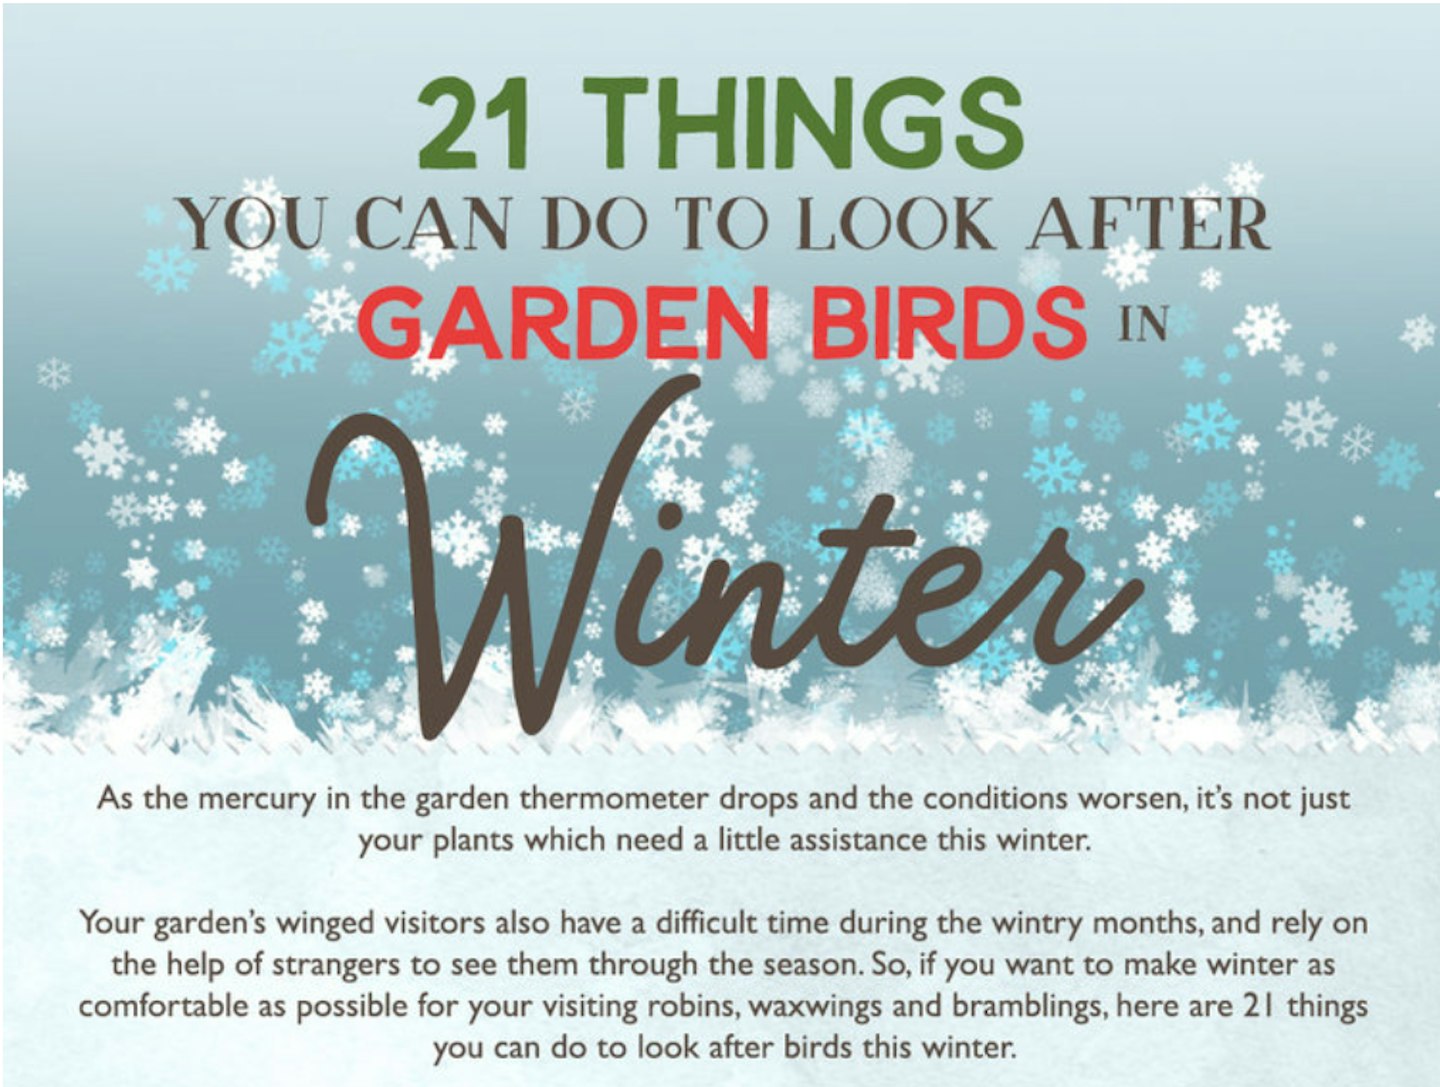 Tips For Looking After Garden Birds In Winter